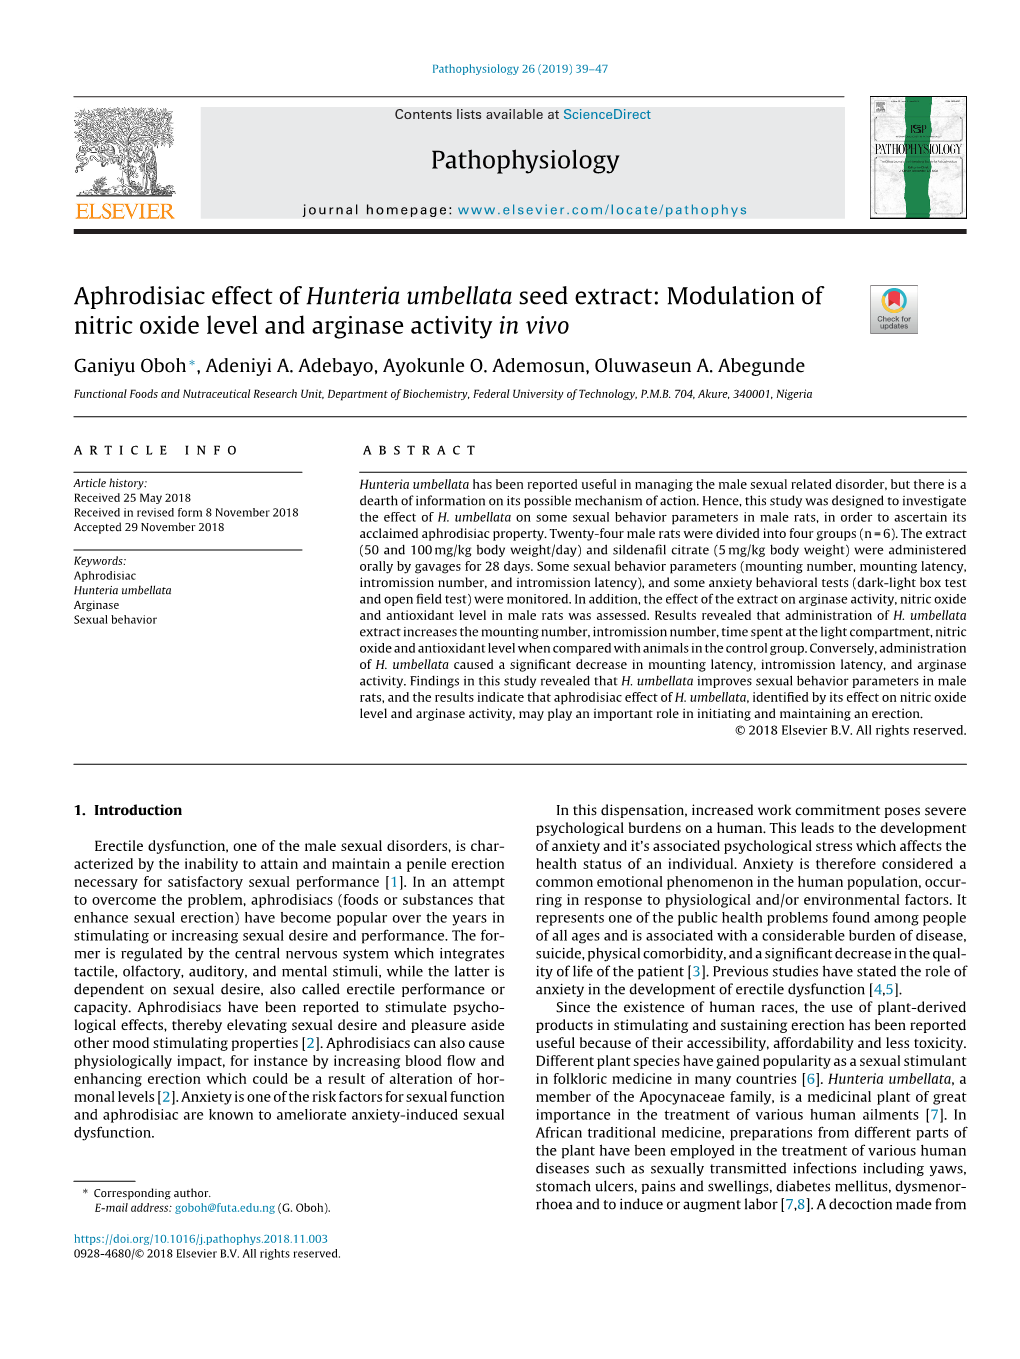 Aphrodisiac Effect of Hunteria Umbellata Seed Extract: Modulation Of